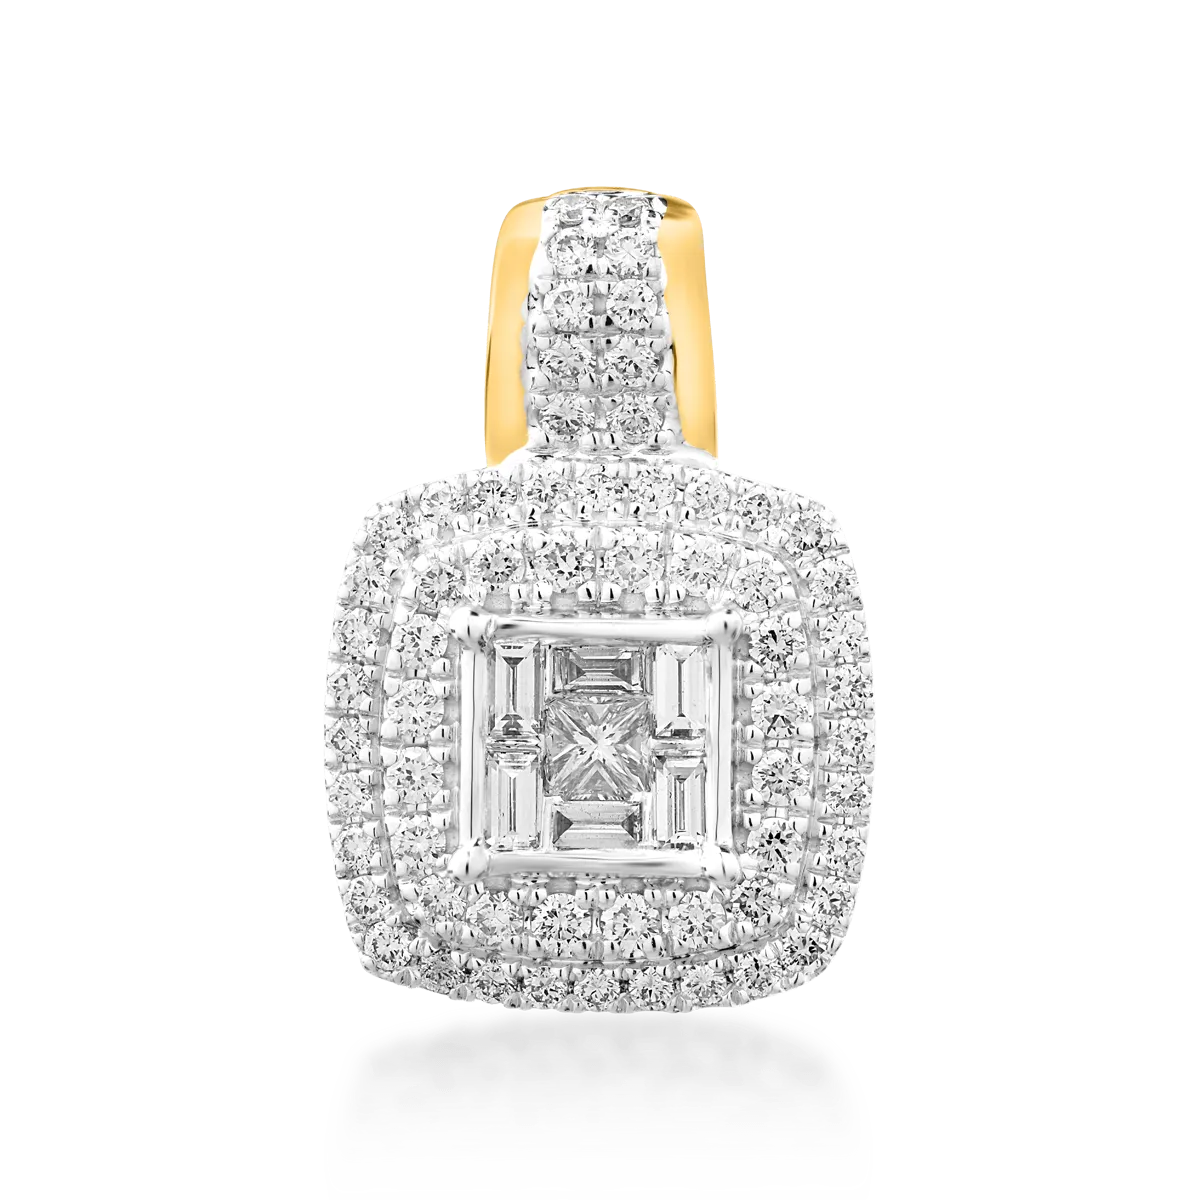 18K white/yellow gold pendant with 0.45ct diamonds